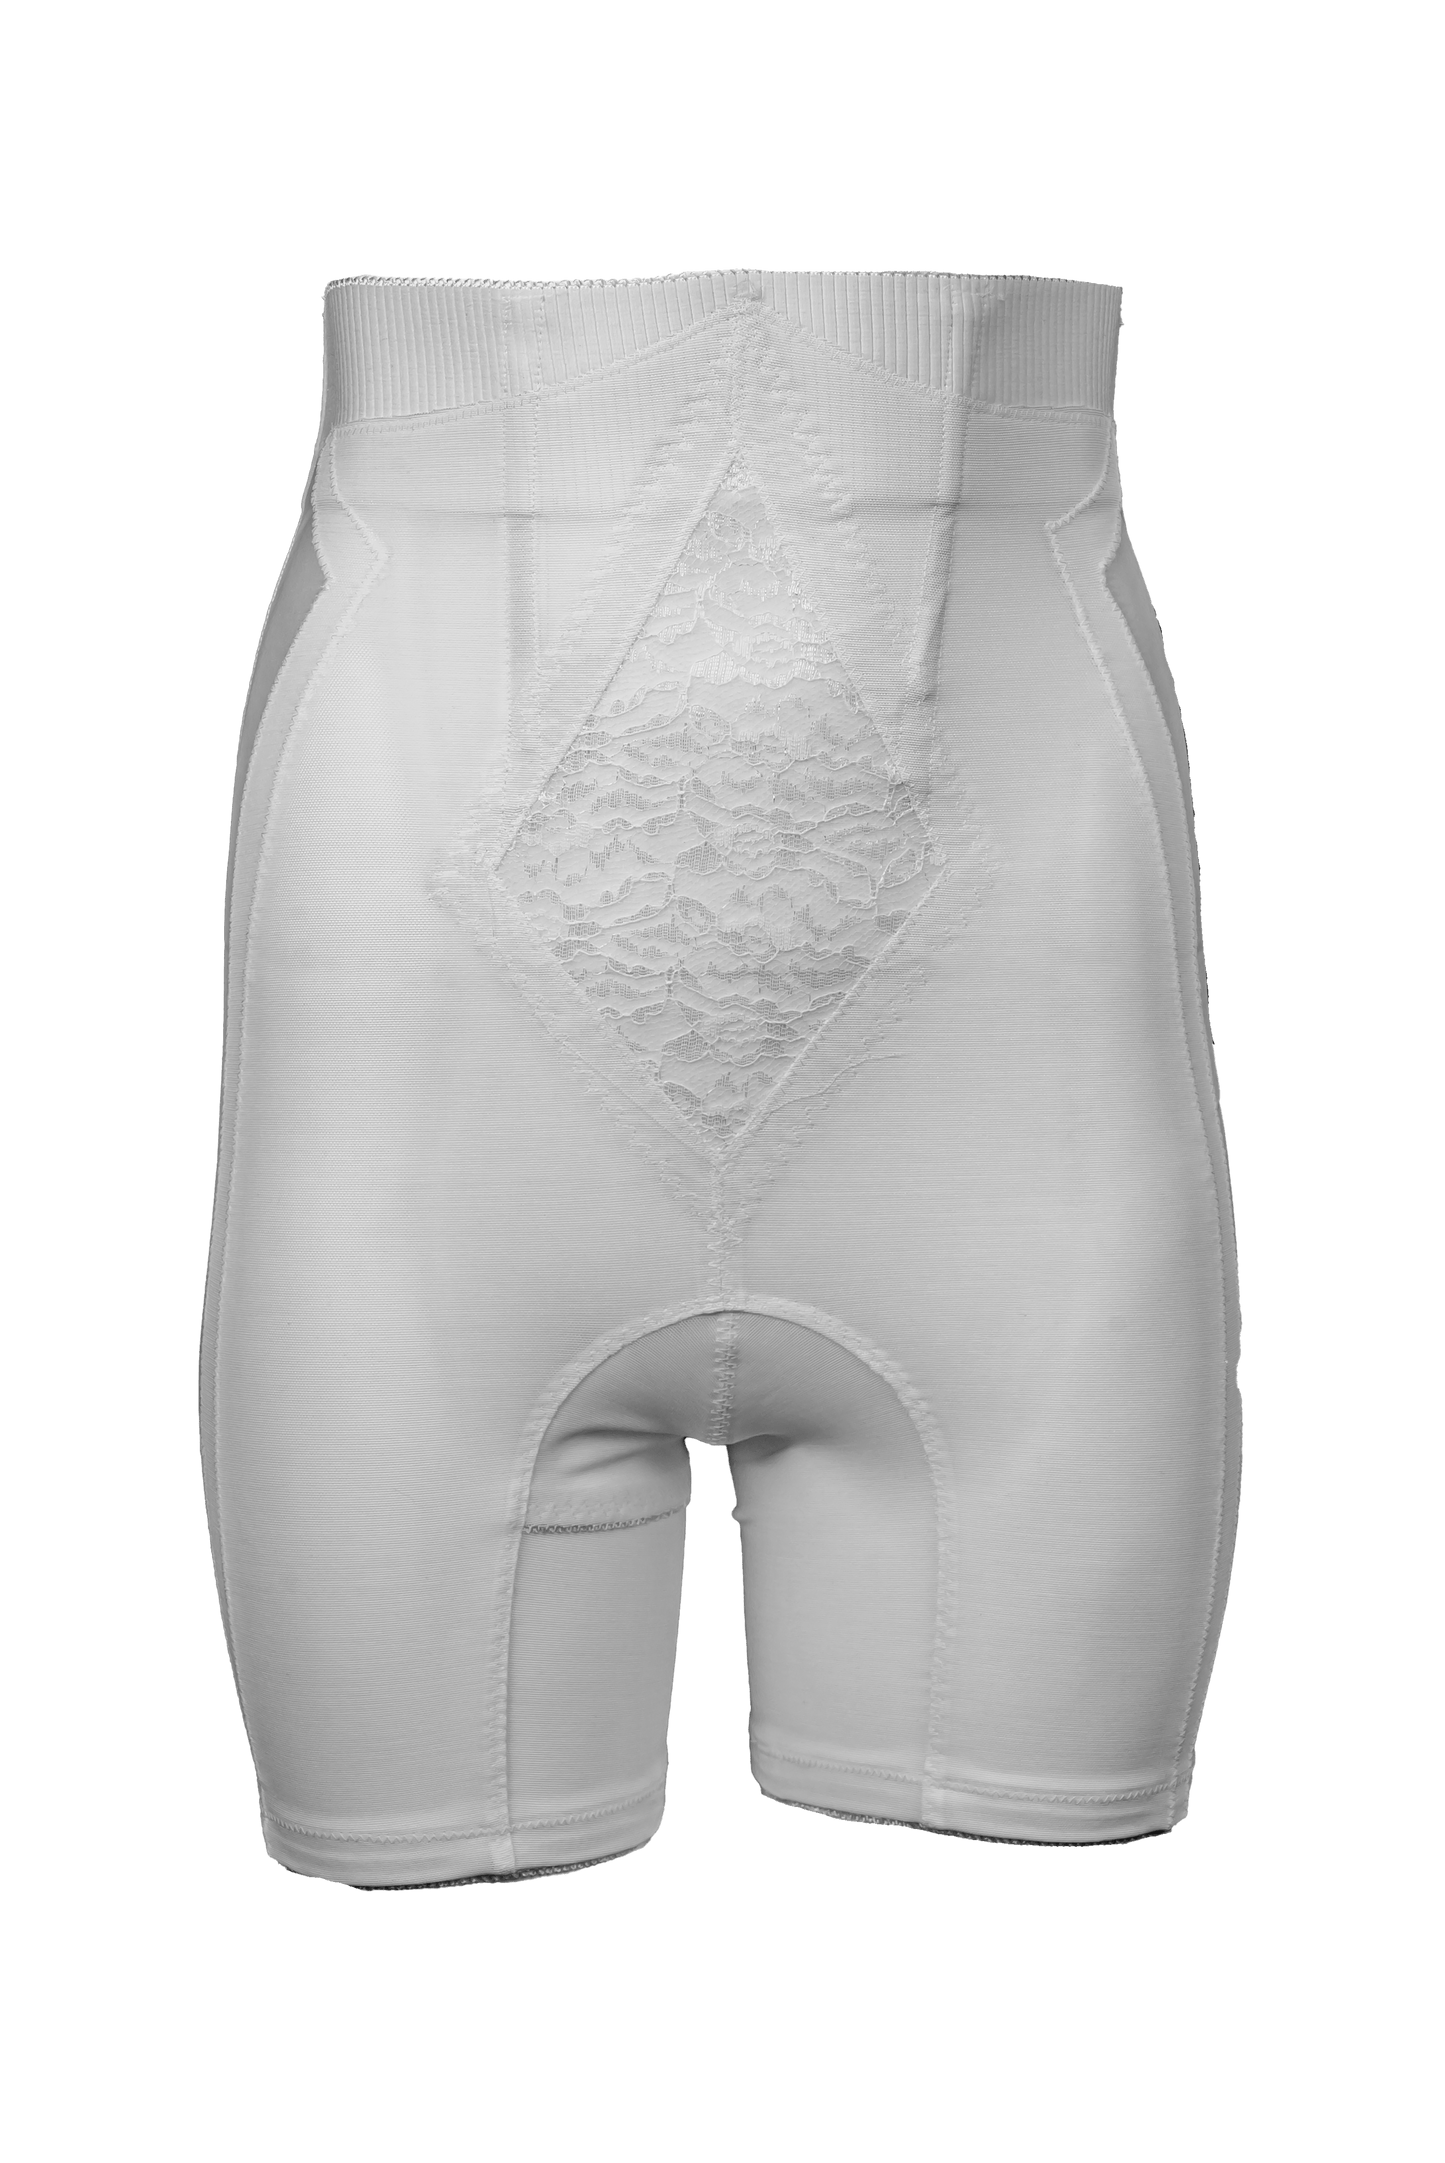 Long leg girdles controls waist, hips and back: Linea style 8299